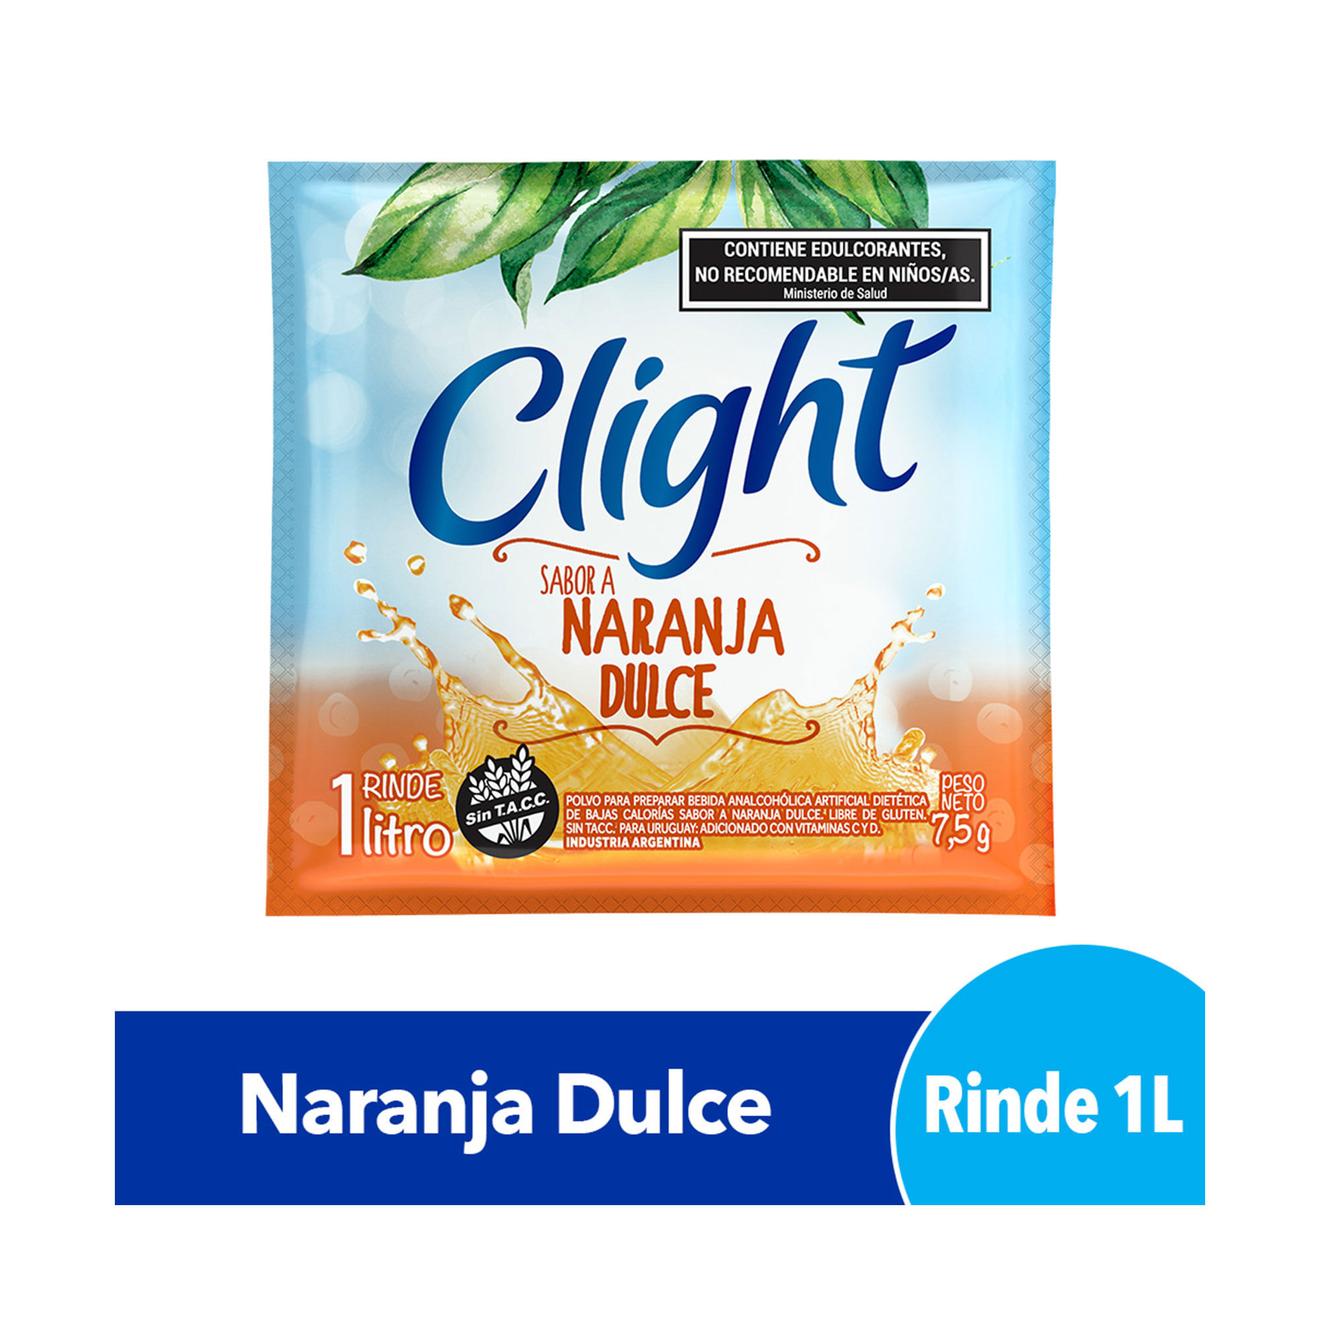 Oferta de Jugo en polvo Clight naranja dulce 7.5 g. por $179,4 en Carrefour